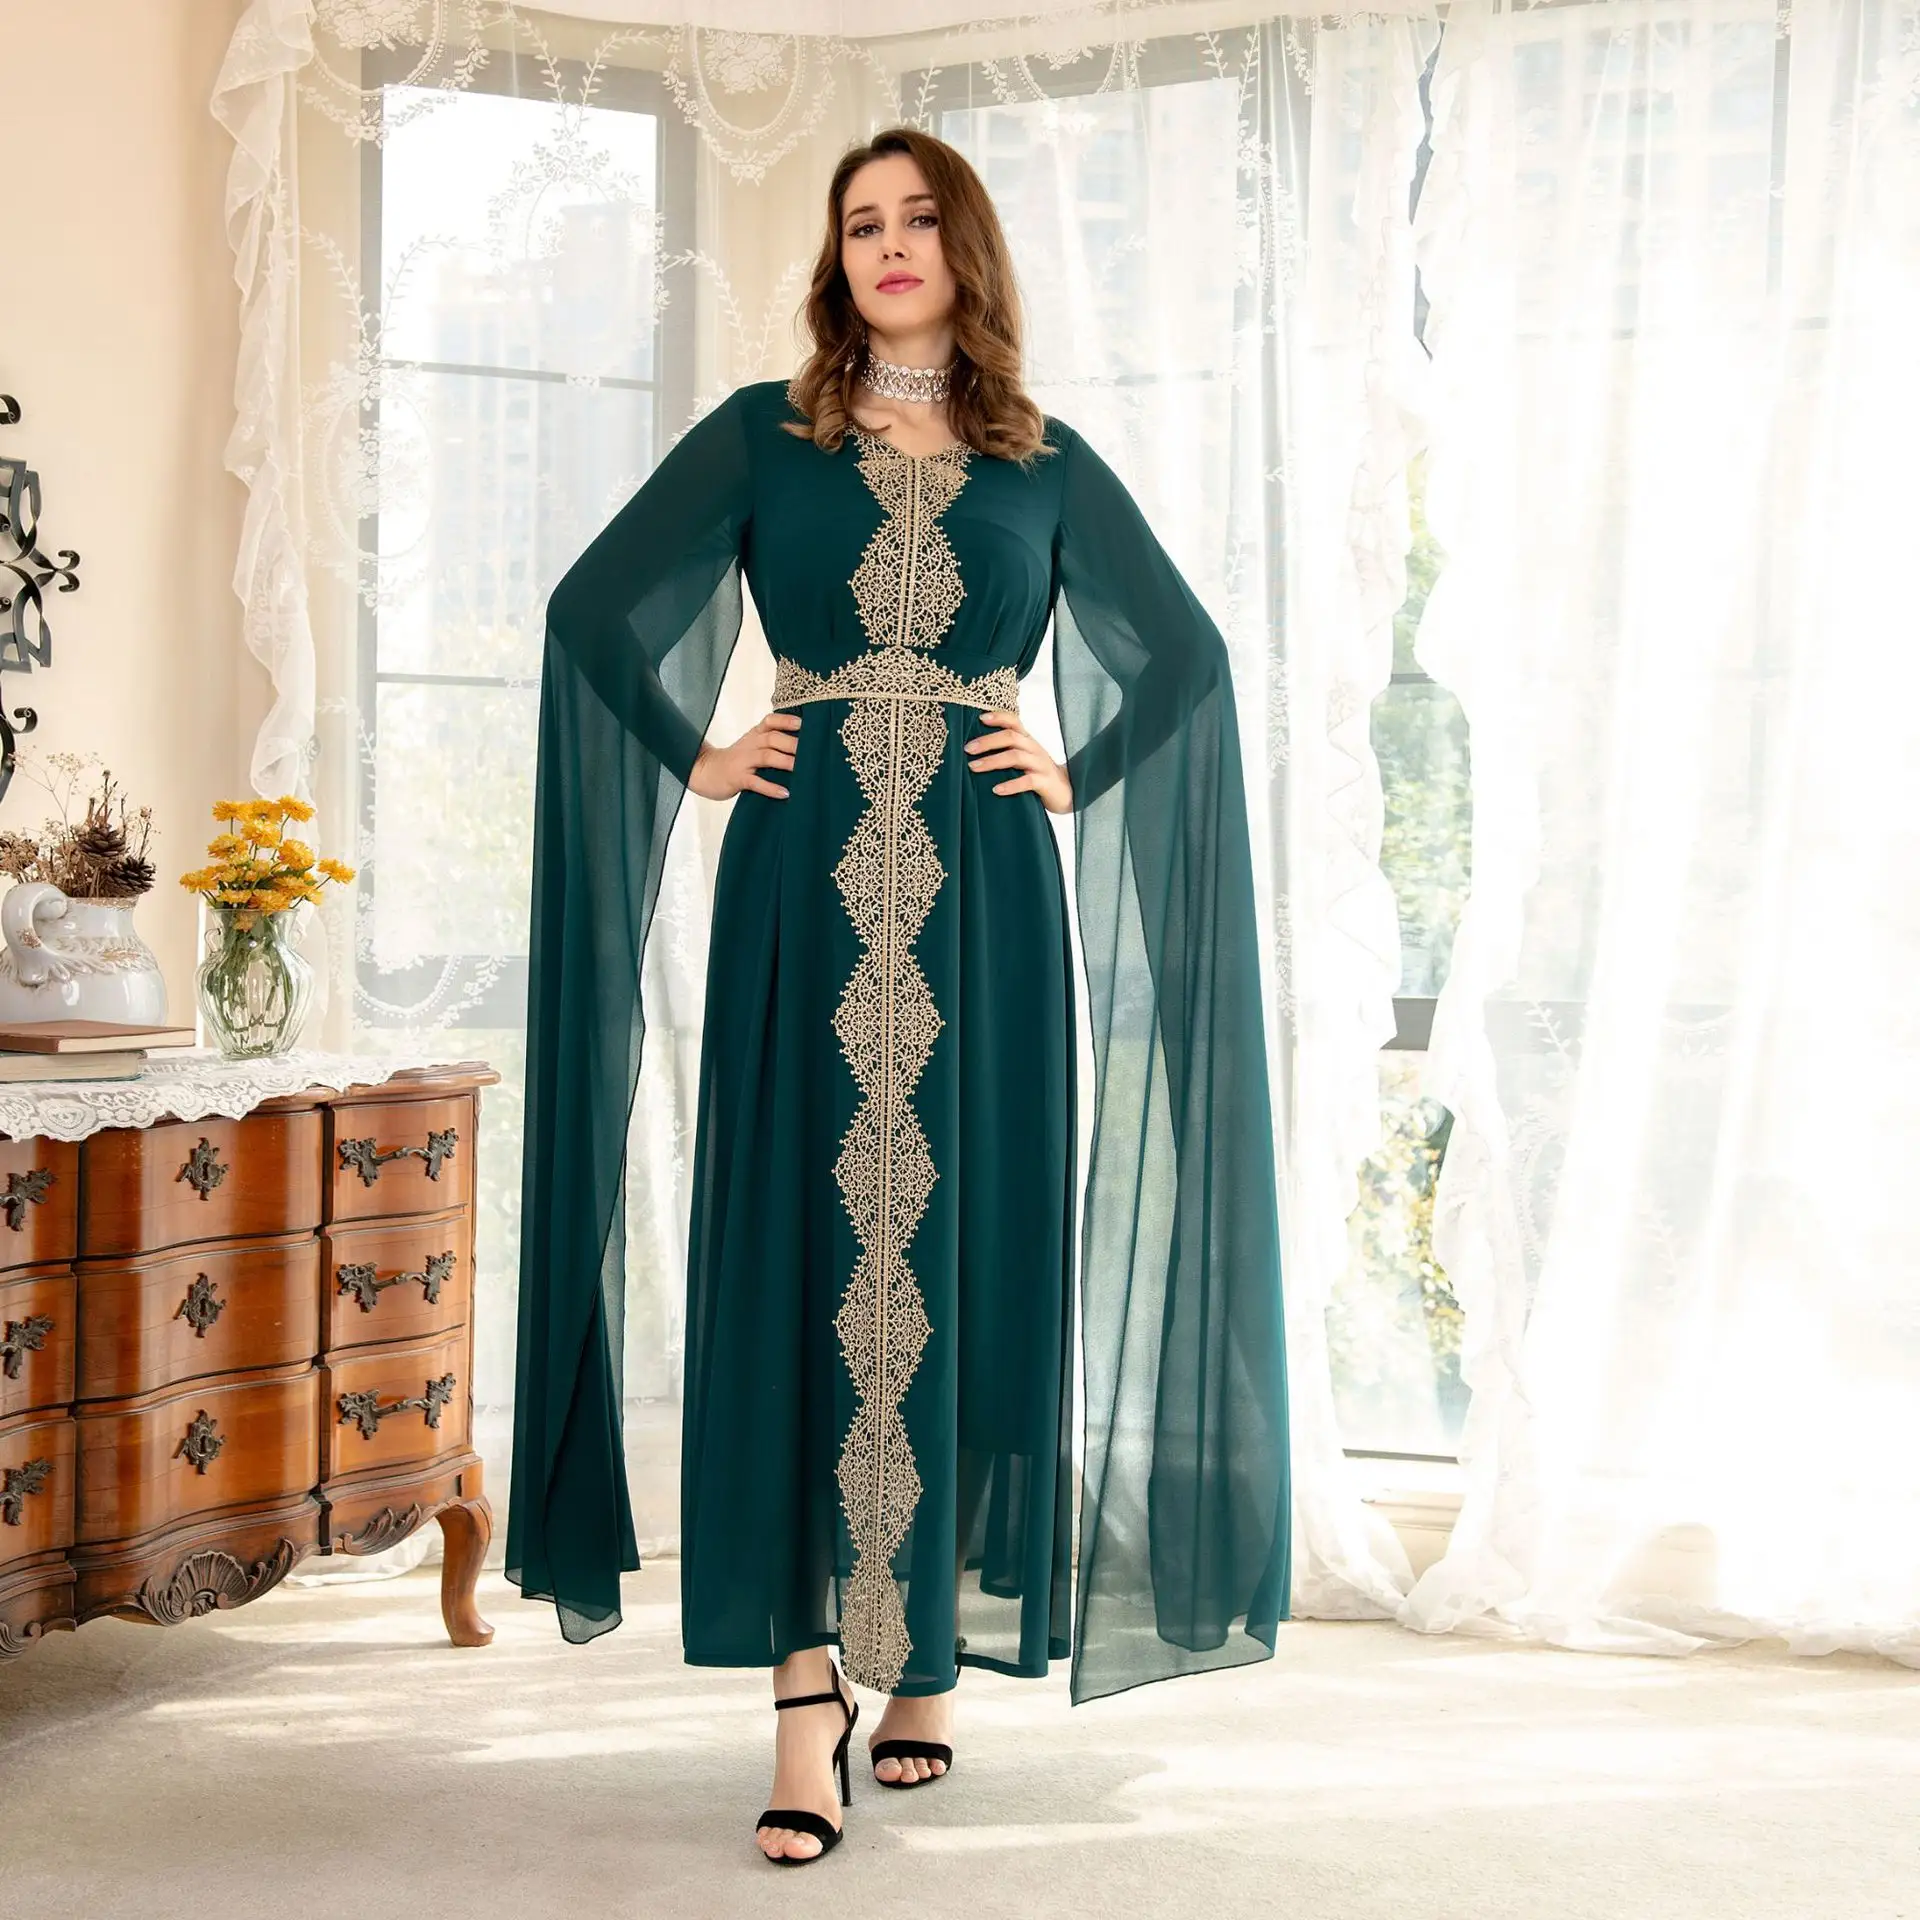 2022 latest design Fashion Cape sleeve Lace Chiffon Dubai Arab bat sleeve Middle East women's dress